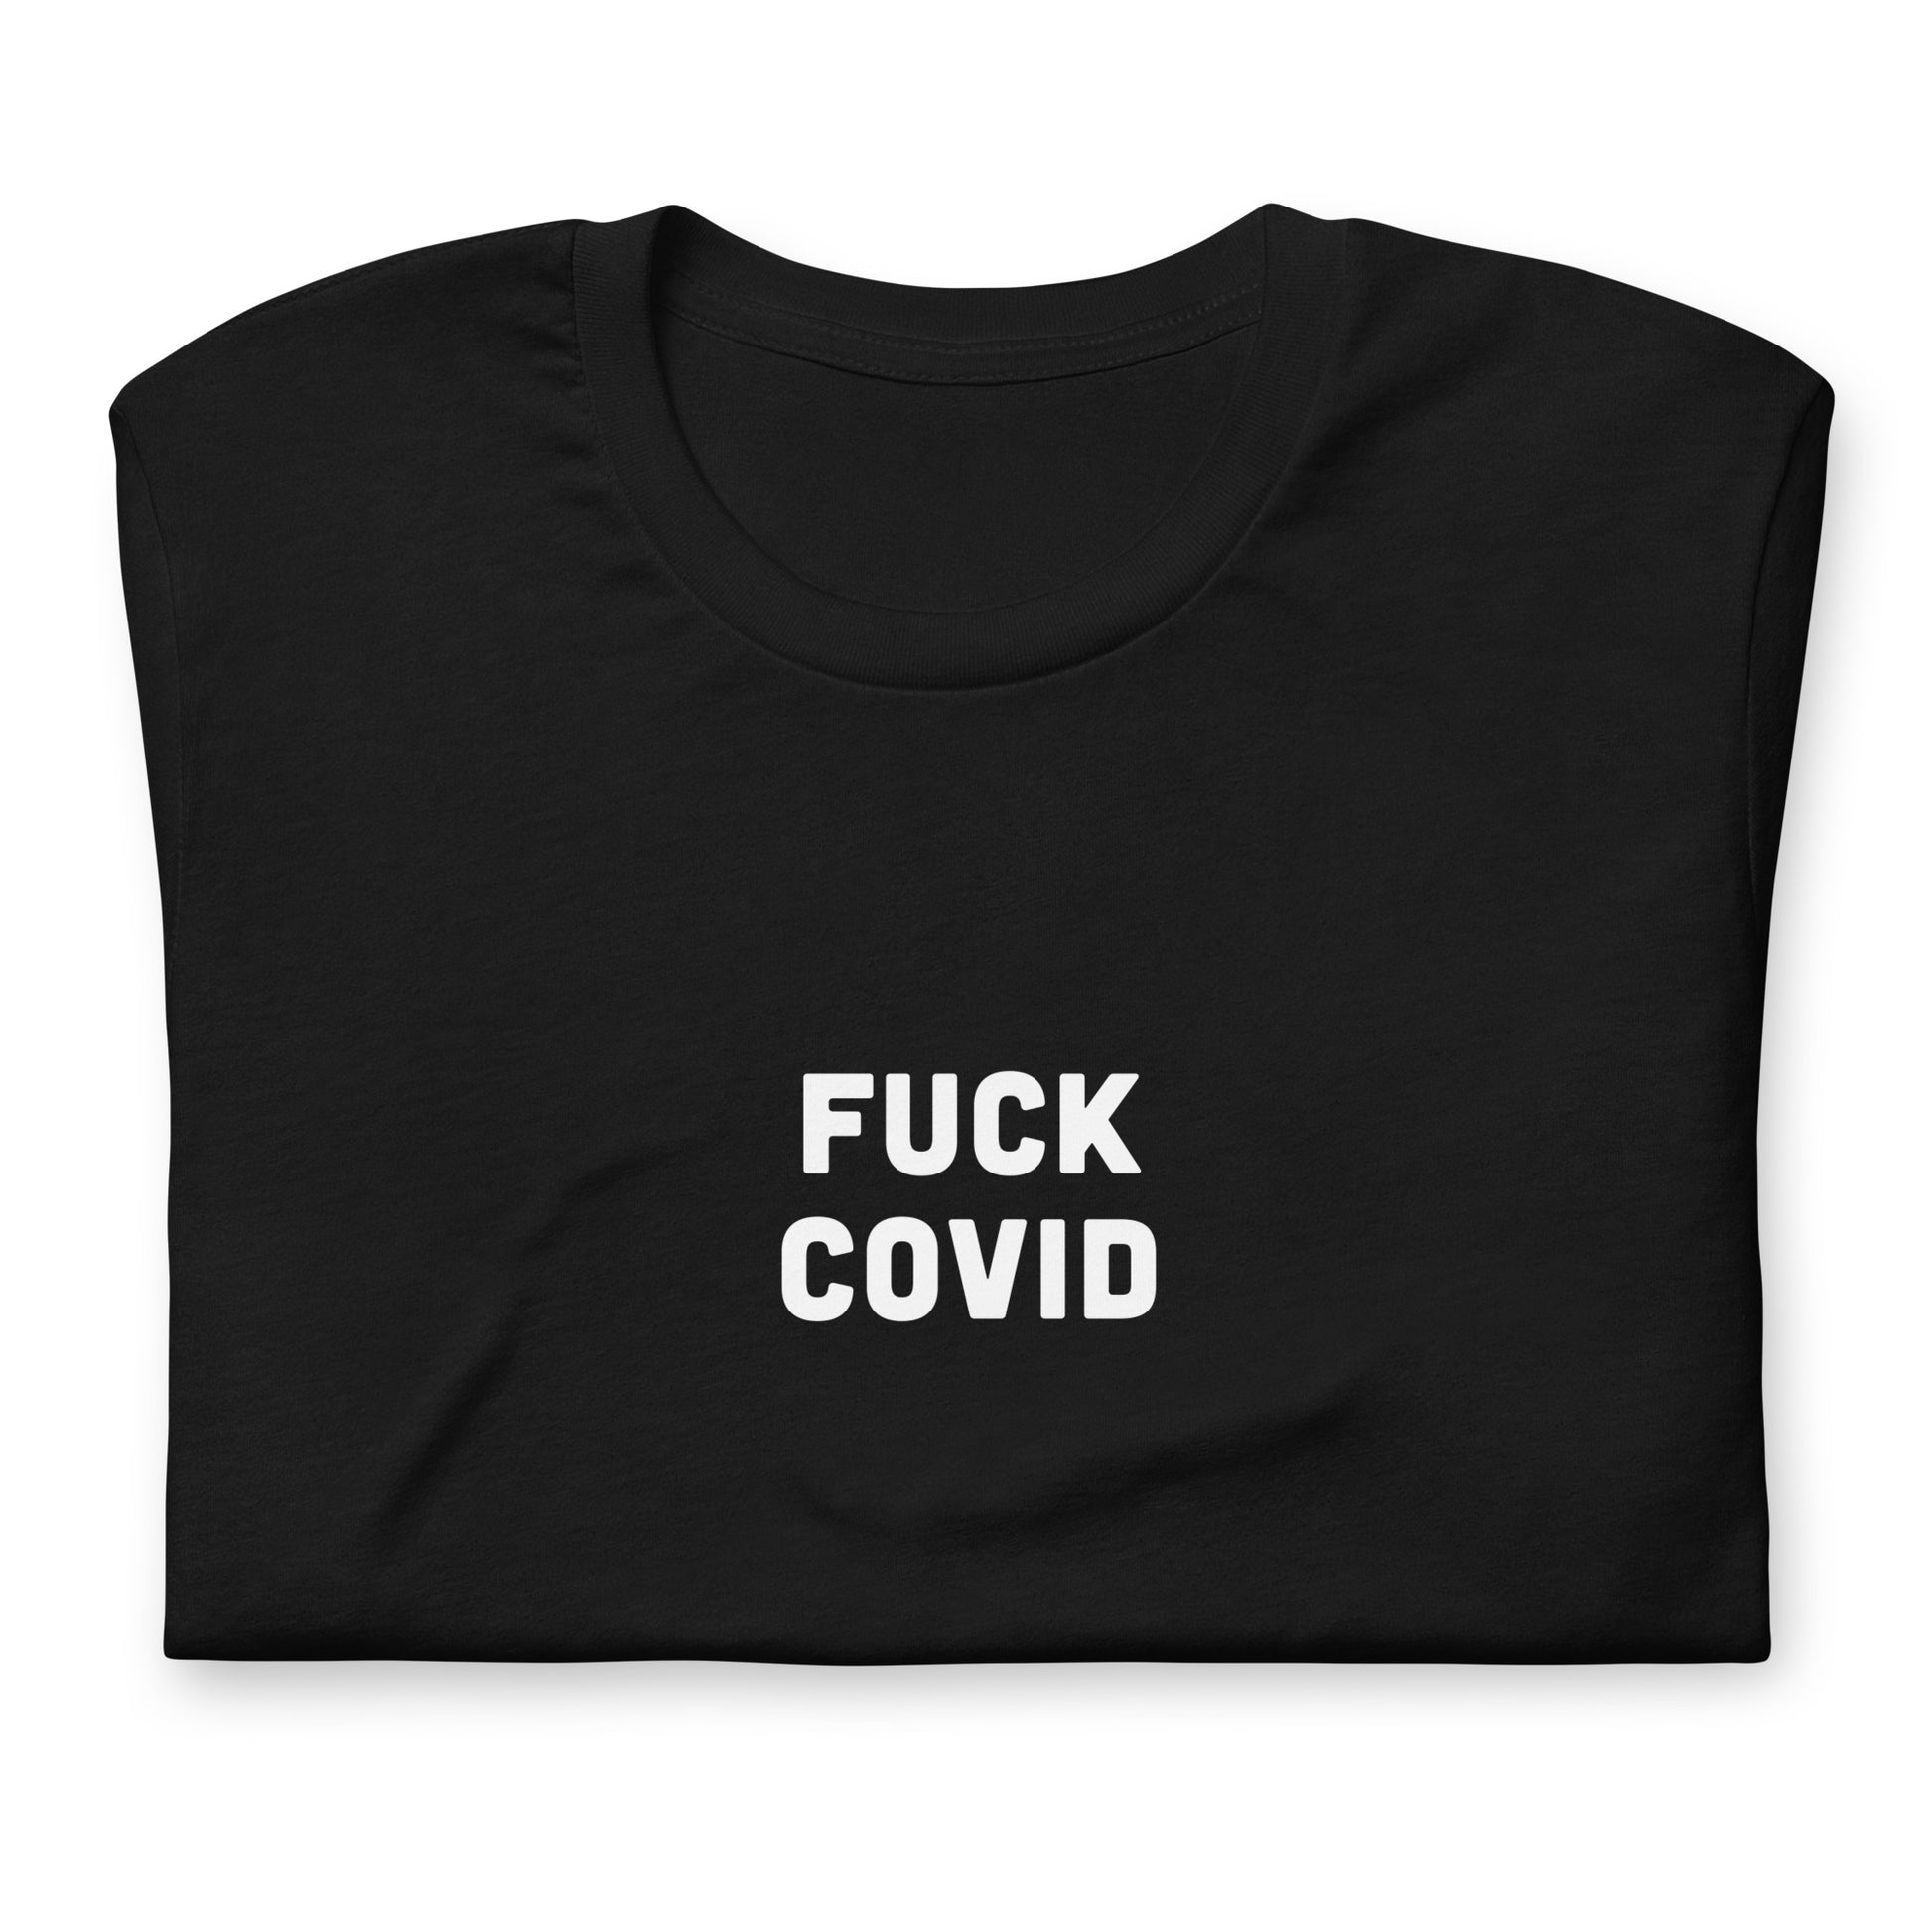 Fuck Covid T-Shirt Size M Color Black